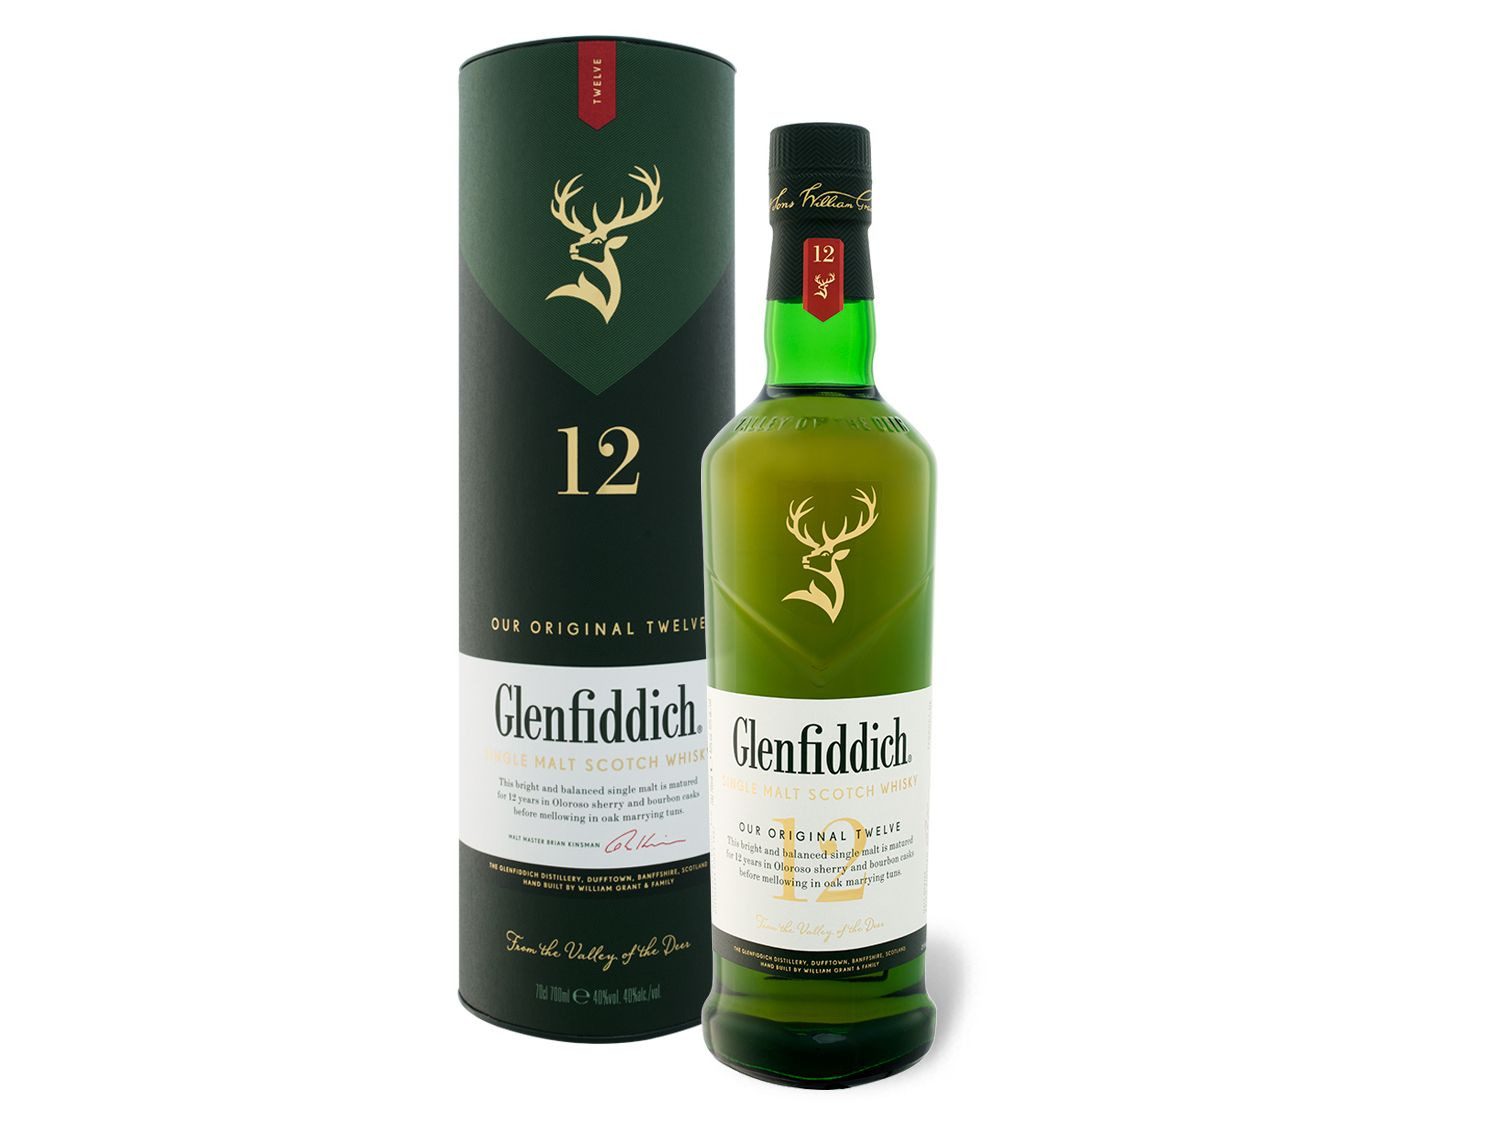 Signature Speyside Single Glenfiddich Whis… Malt Scotch